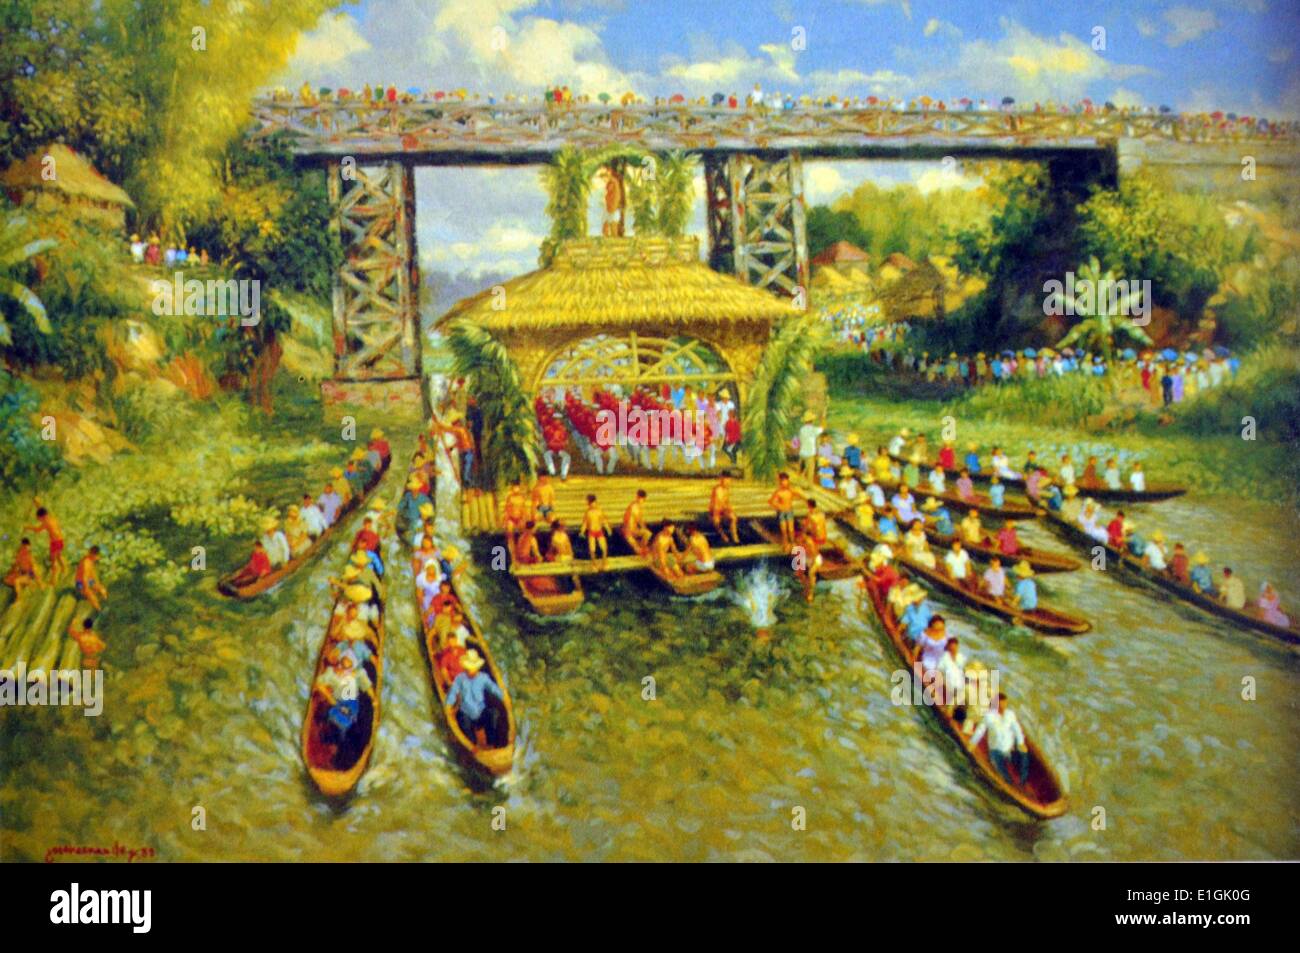 Jose W Hernandez, River Boat Festival, 1989.  Oil on canvas. Stock Photo